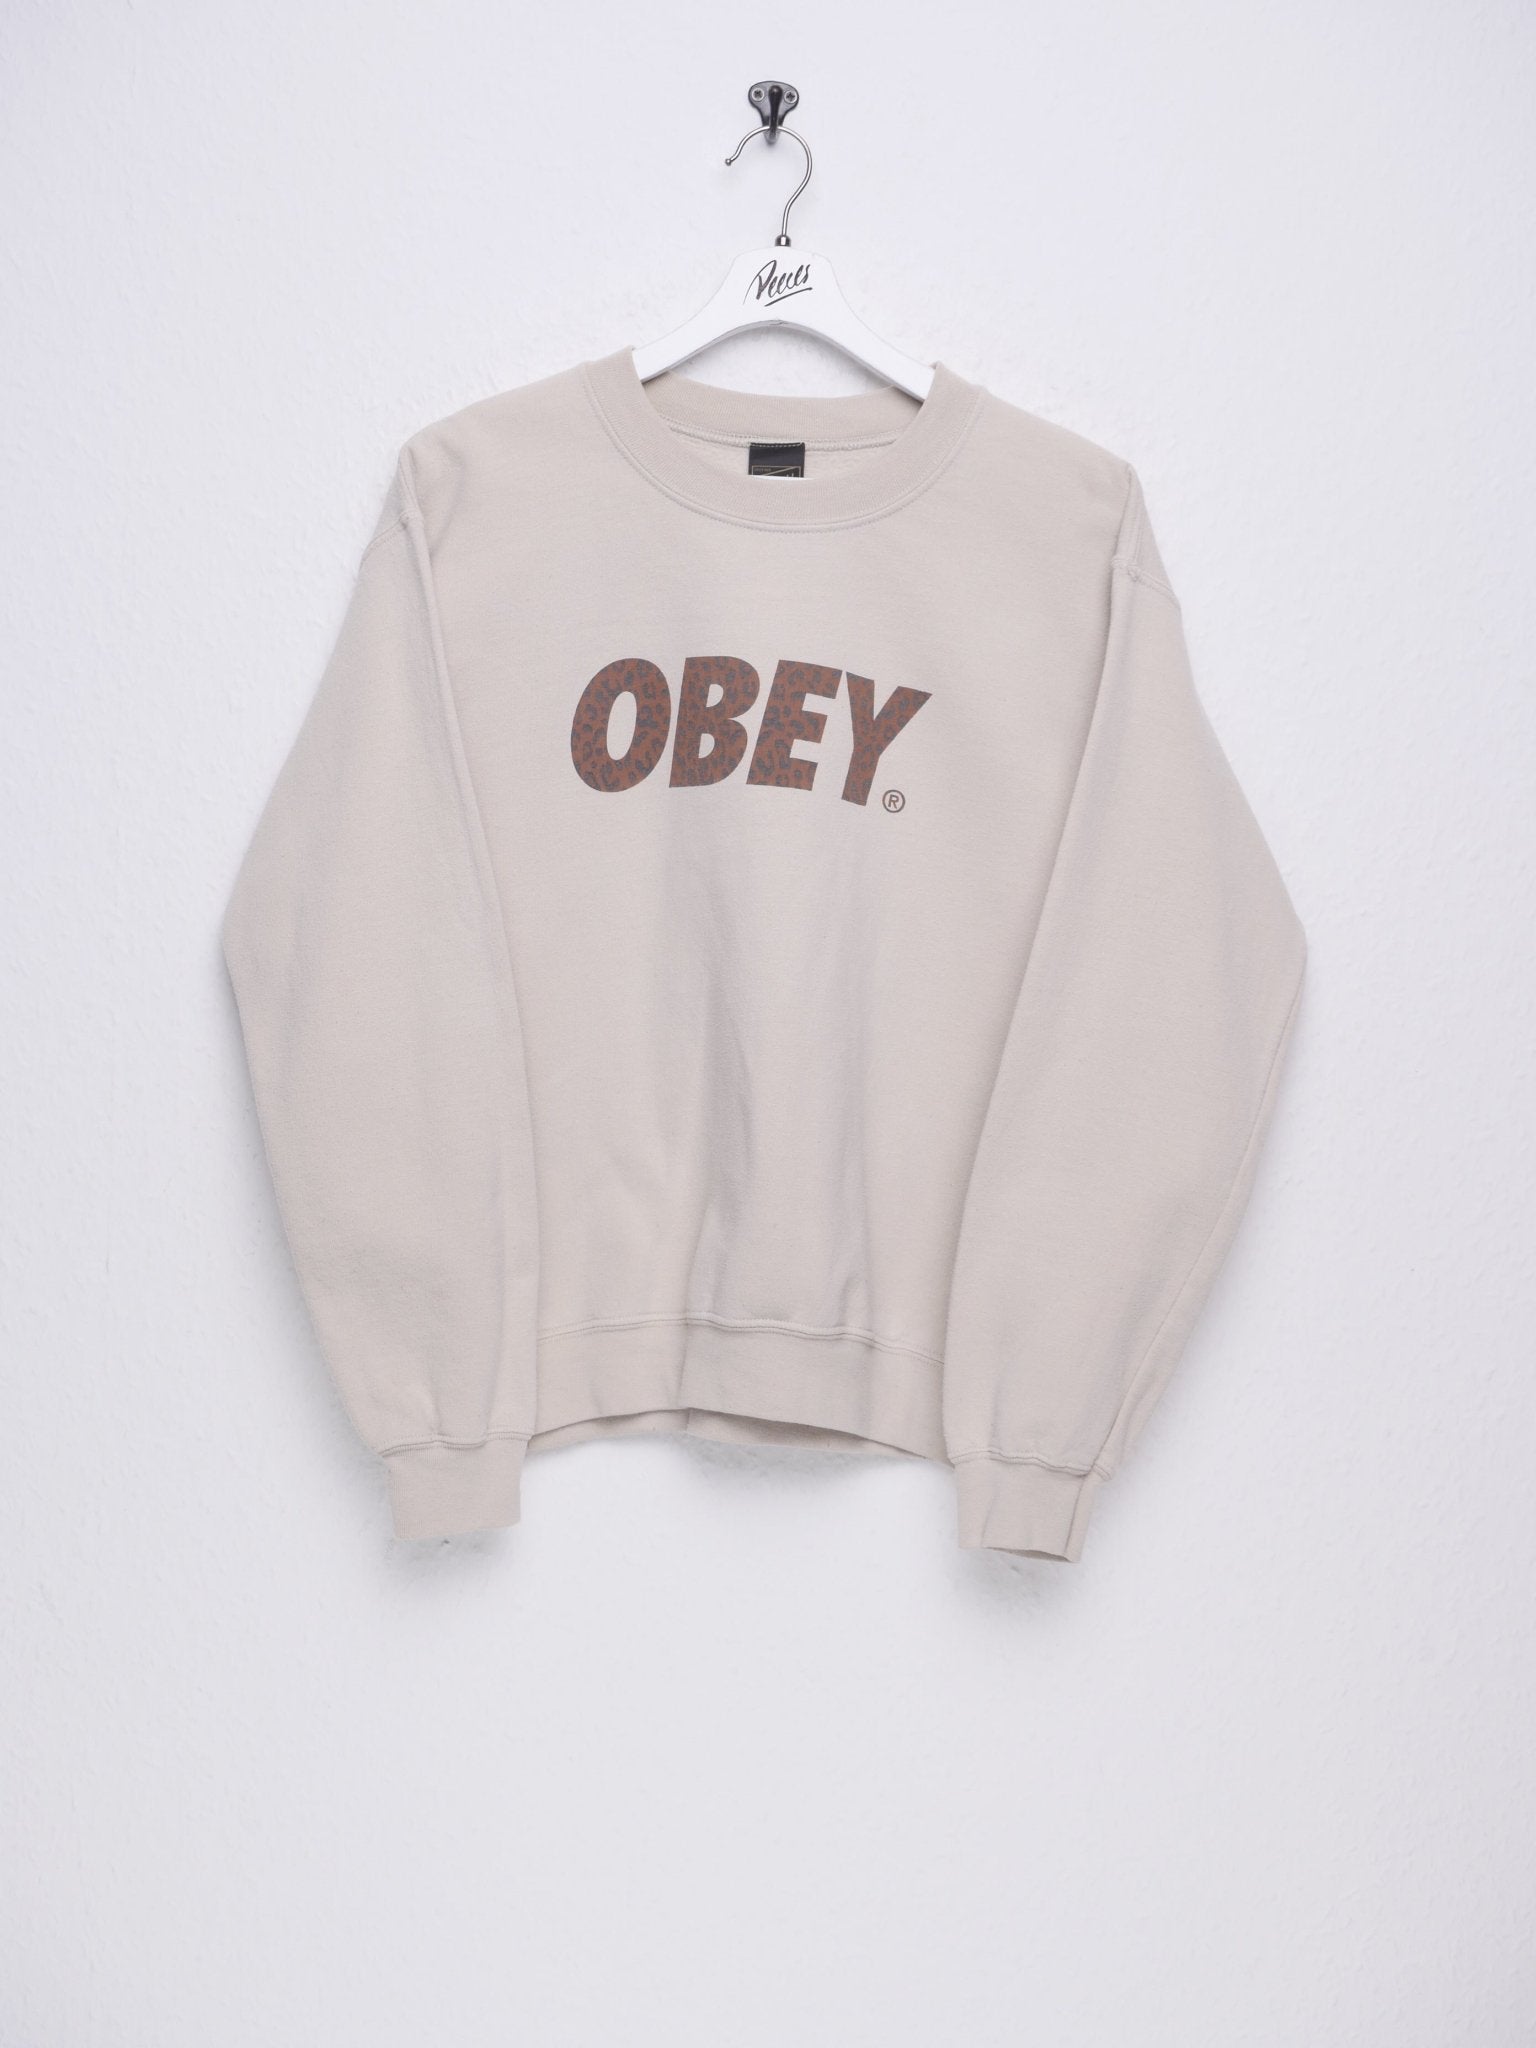 Obey printed Logo beige Sweater - Peeces